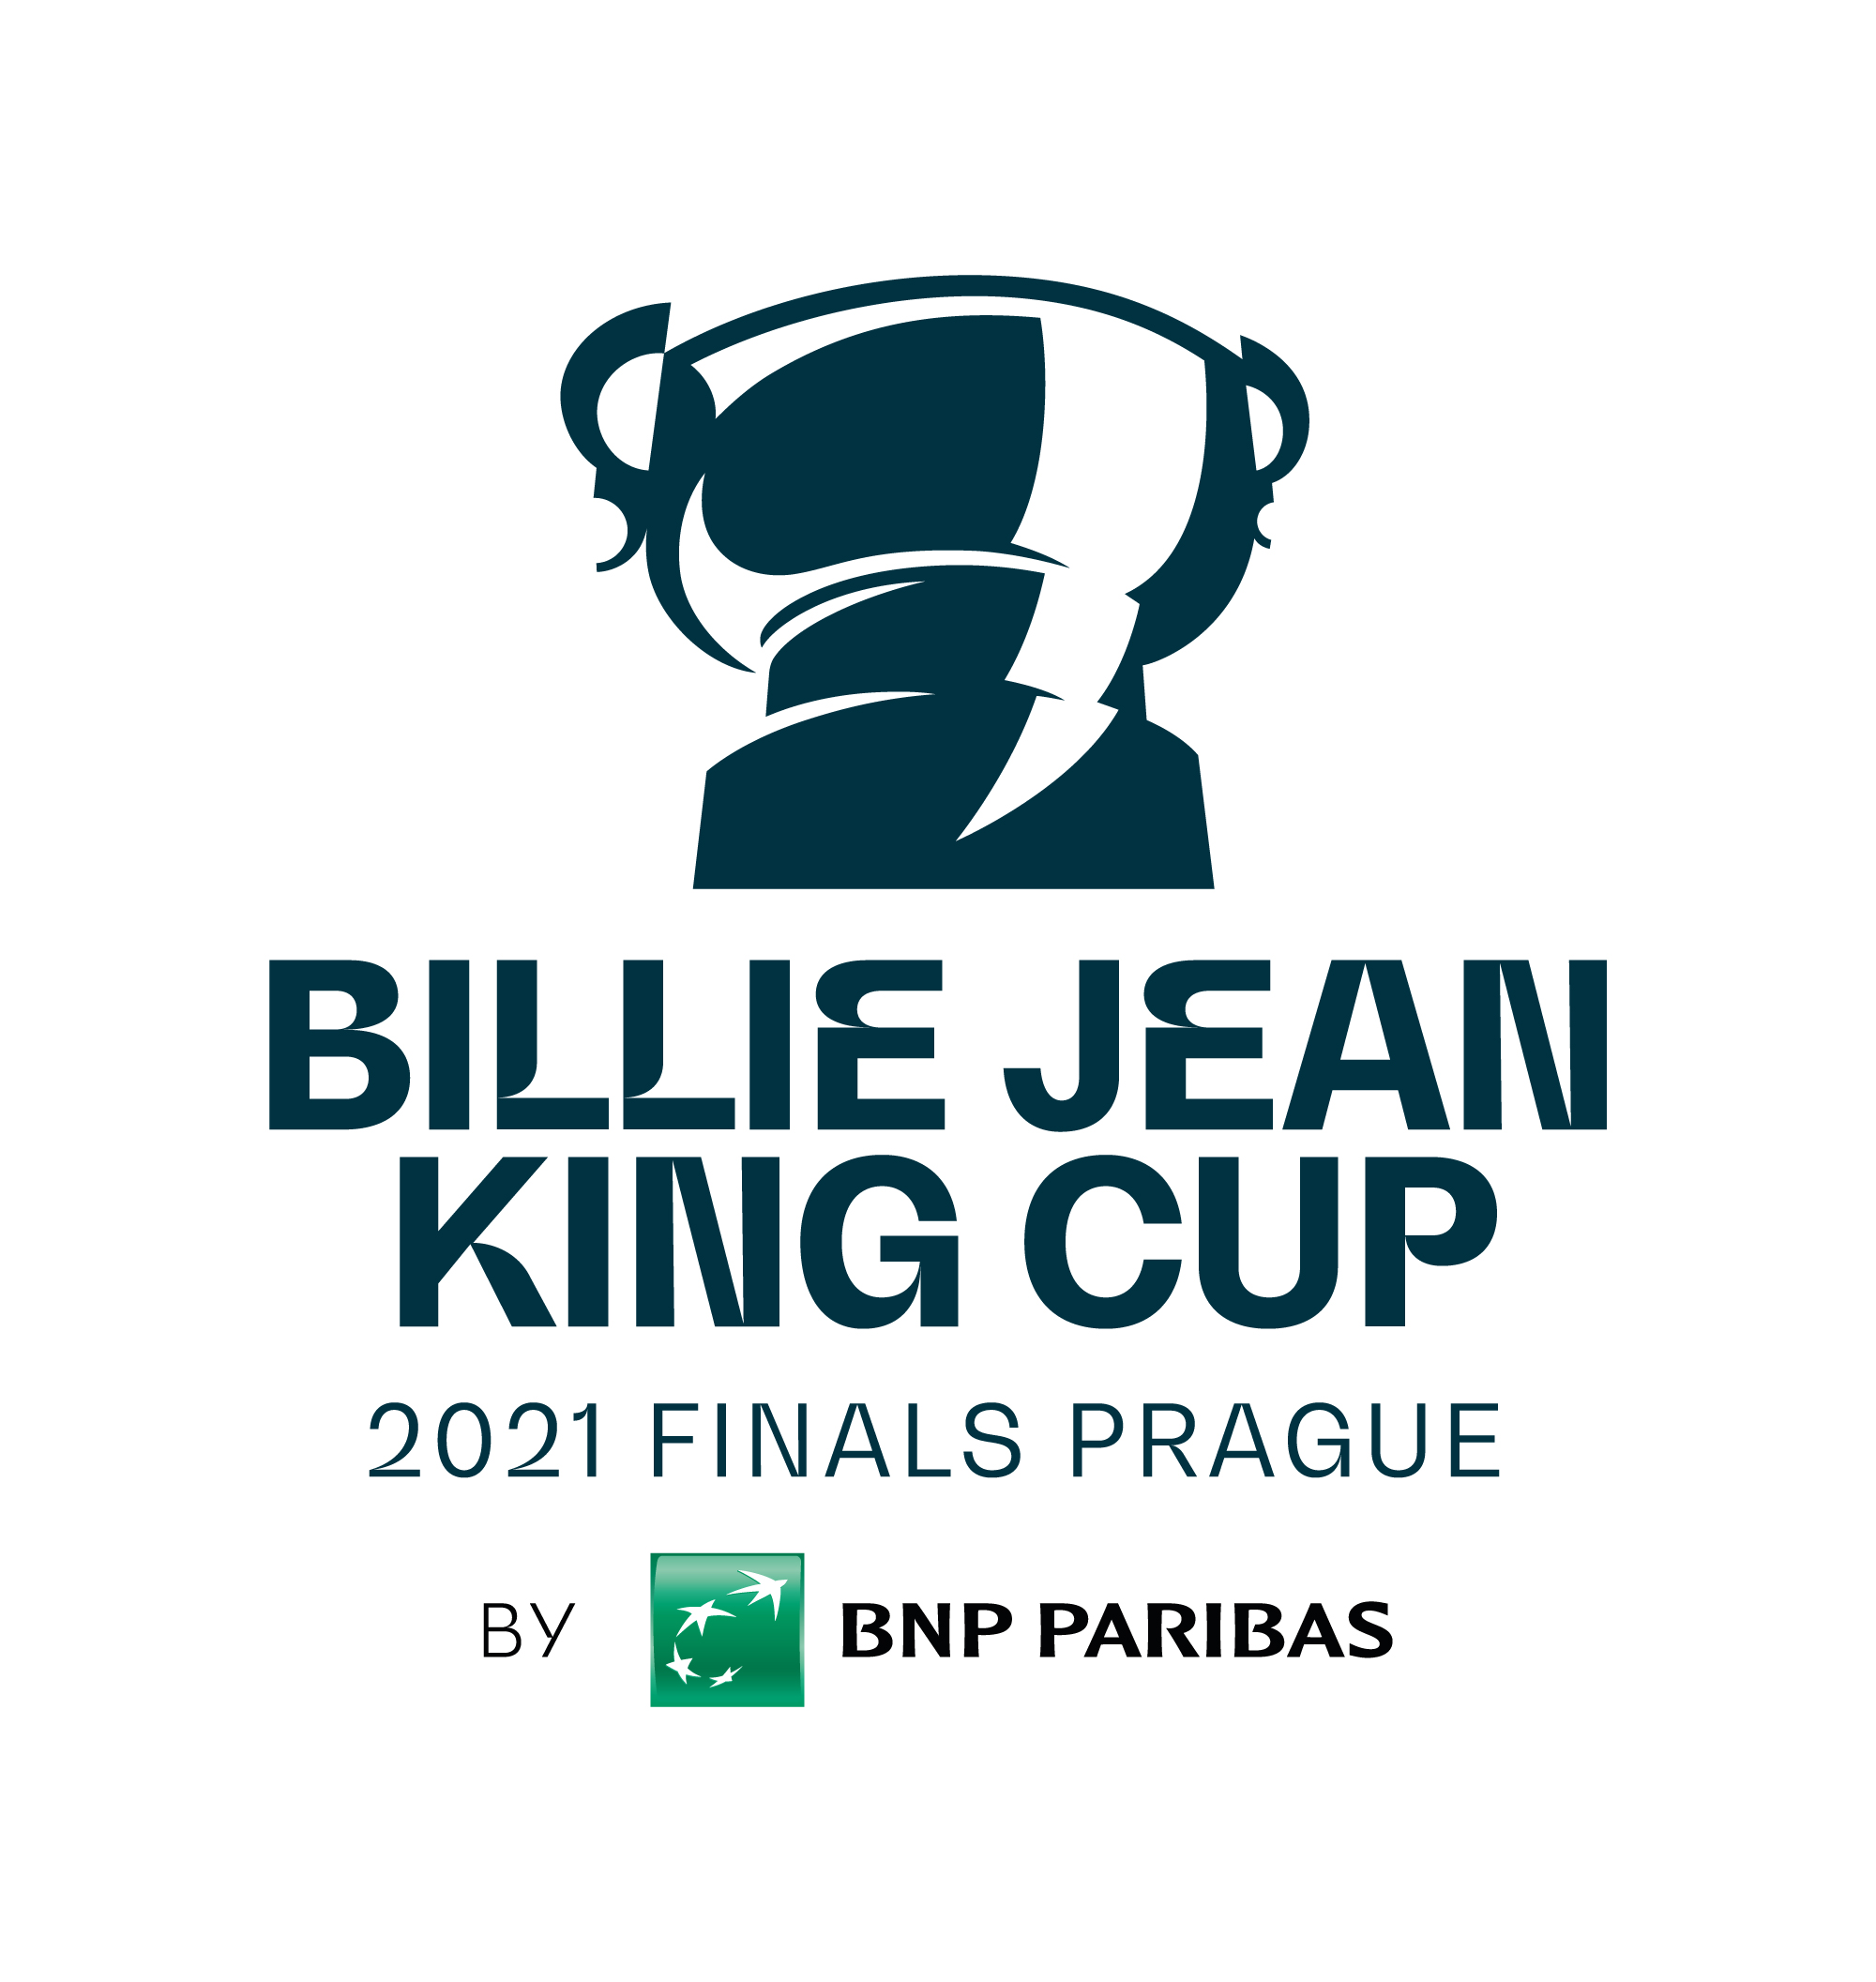 Billie Jean King Cup